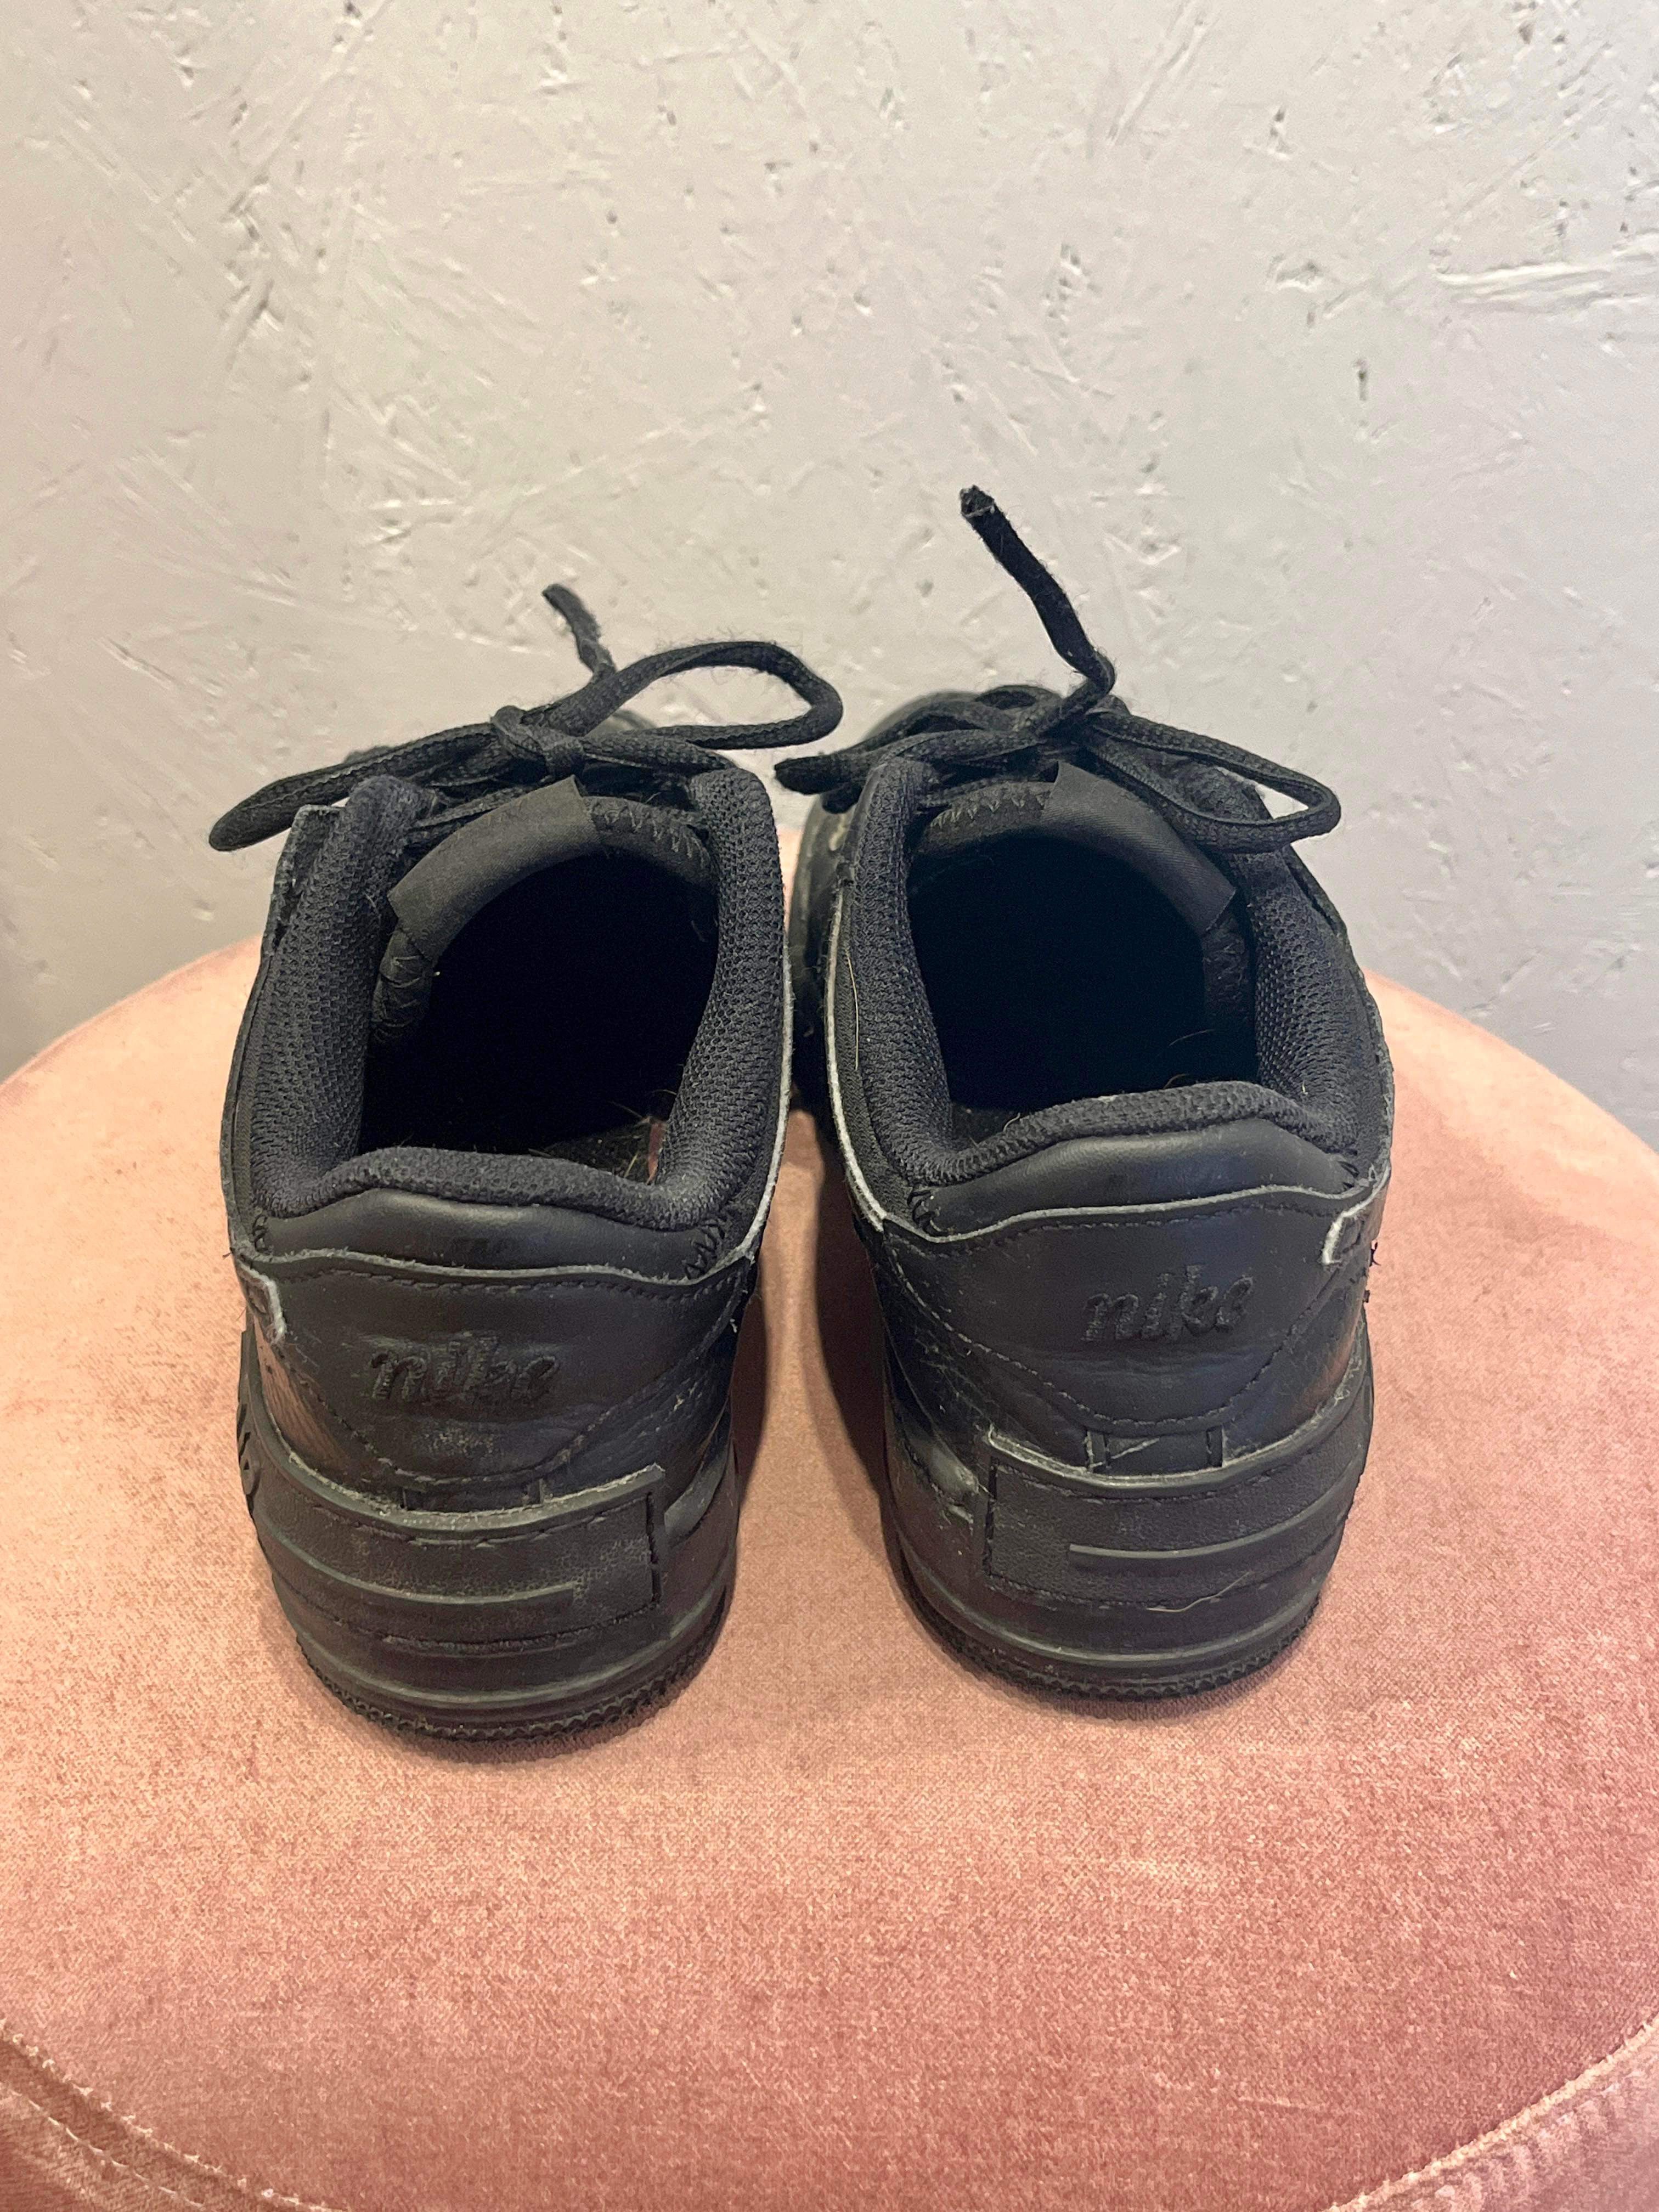 Nike - Sneakers - Size: 36 1/2